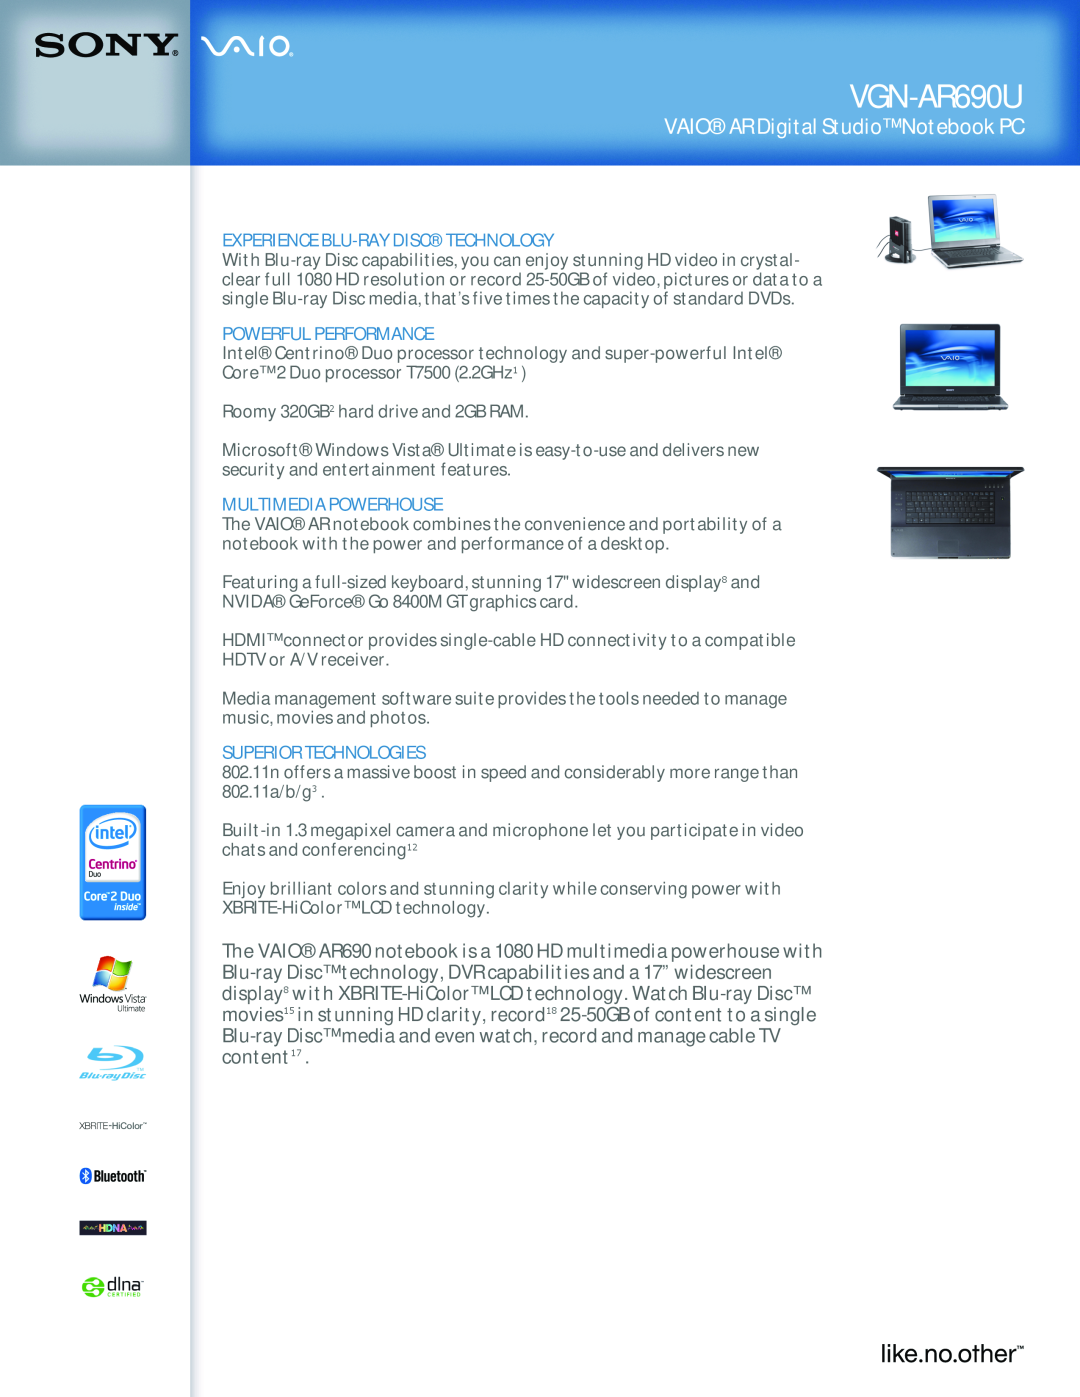 Sony VGN-AR690U manual VAIOAR Digital Studio Notebook PC, Experience Blu-Ray Disctechnology, Powerful Performance 